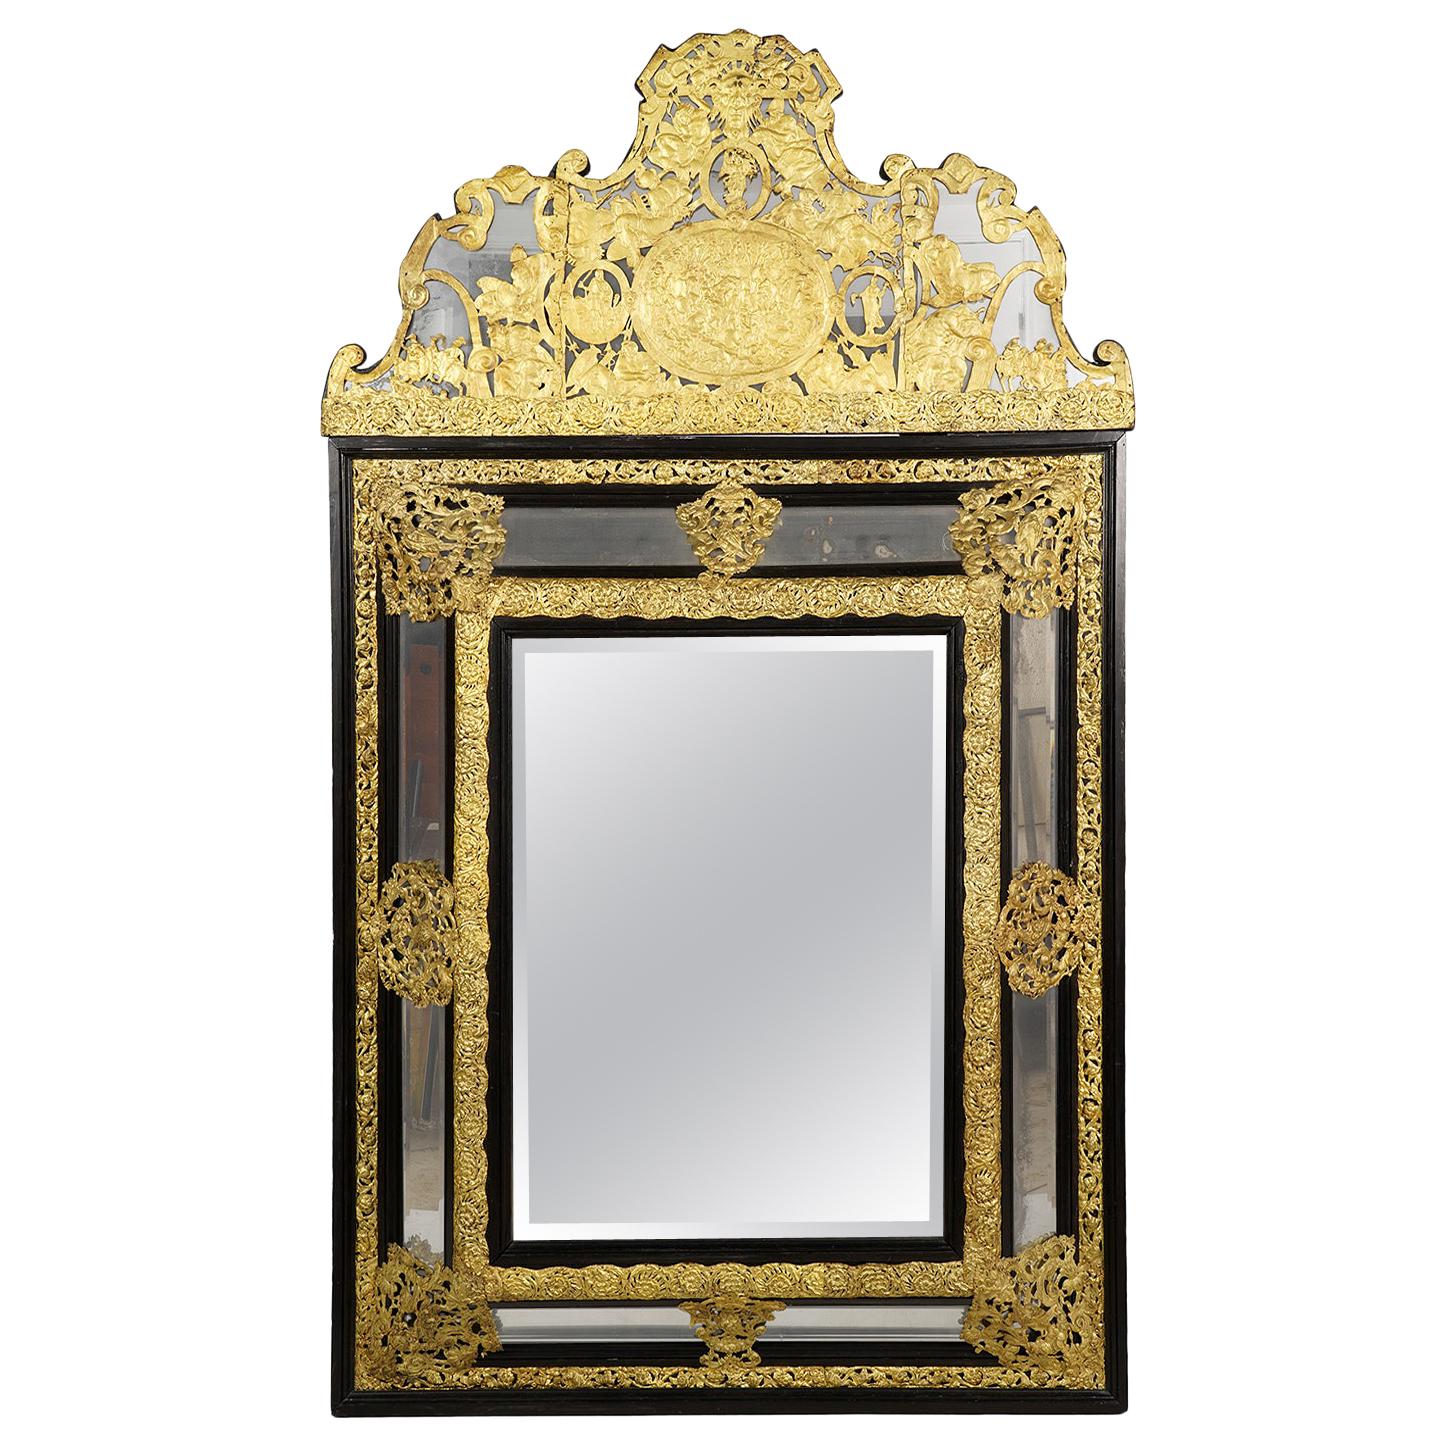 19th Century Dutch Baroque Style Ebonized and Repoussé Gilt Metal Framed Mirror